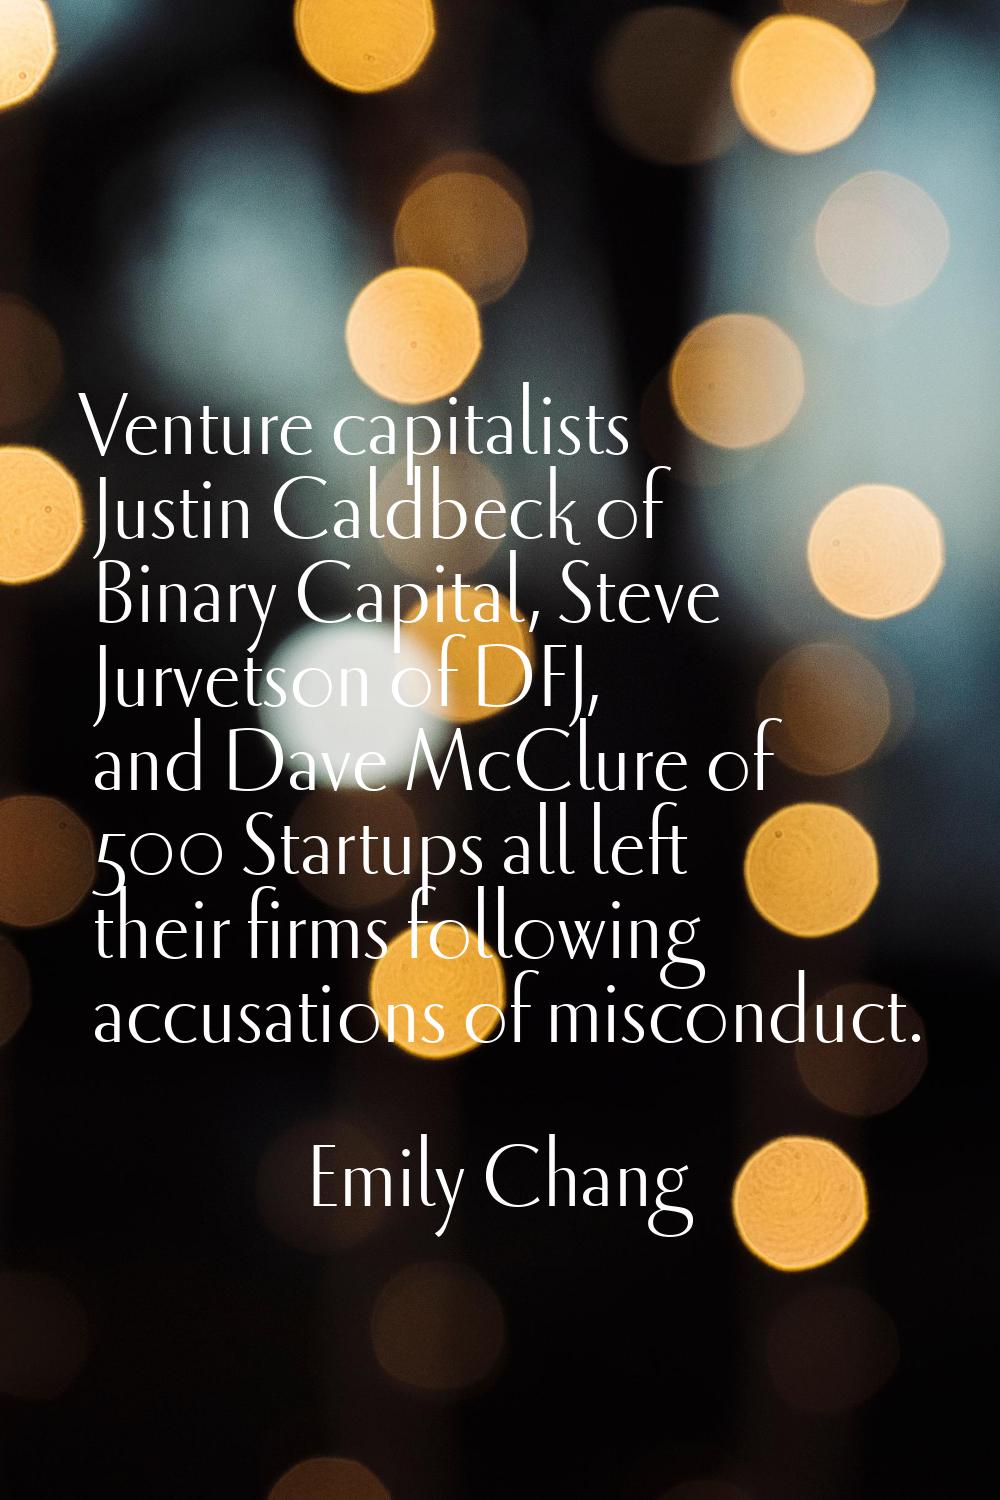 Venture capitalists Justin Caldbeck of Binary Capital, Steve Jurvetson of DFJ, and Dave McClure of 